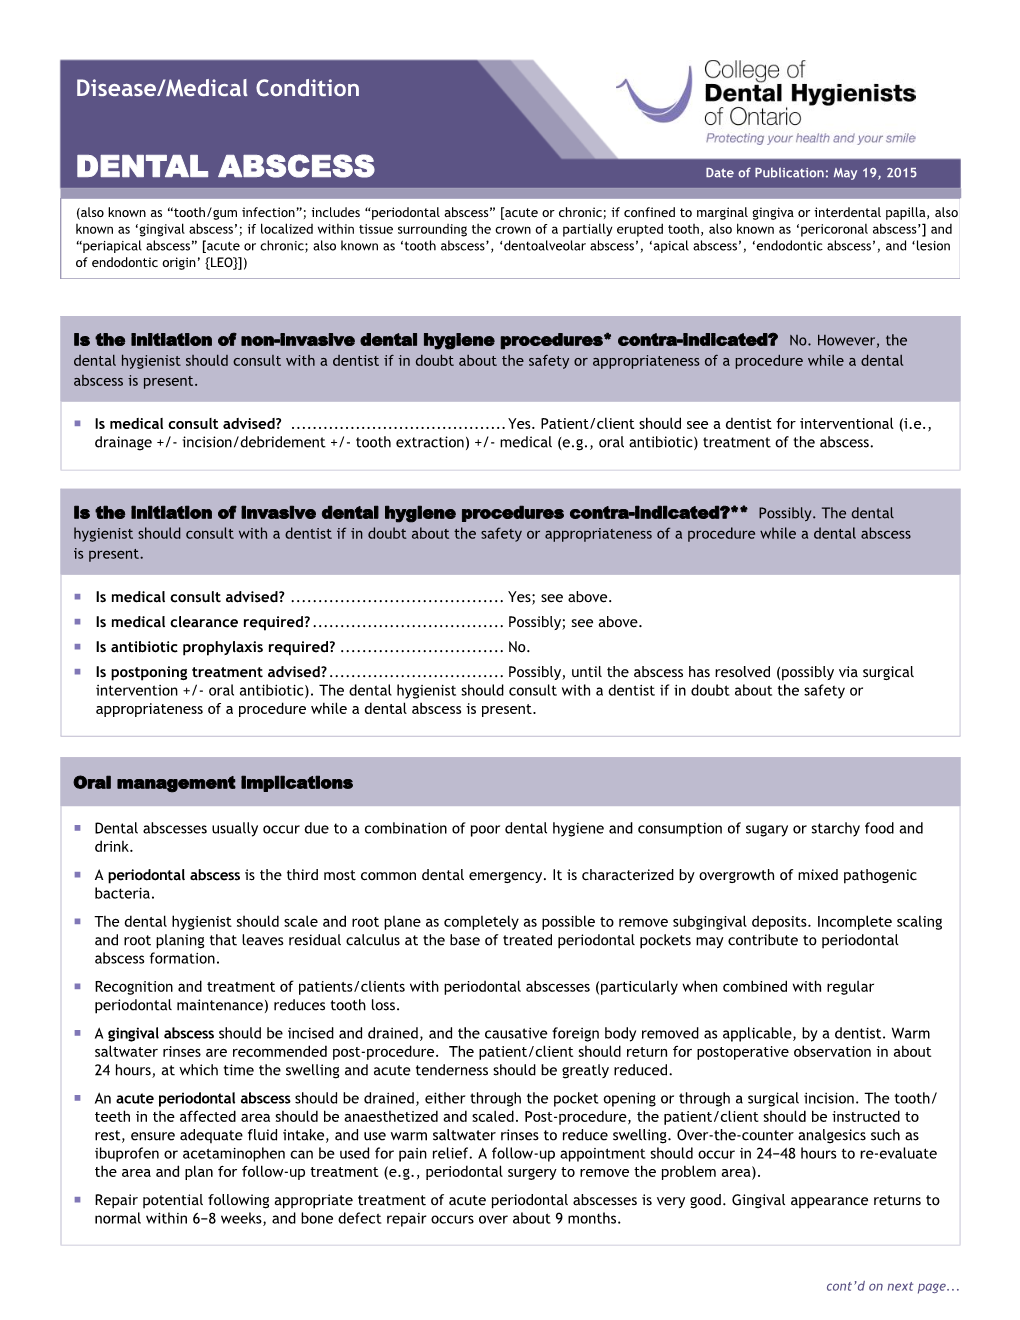 CDHO Factsheet Dental Abscess